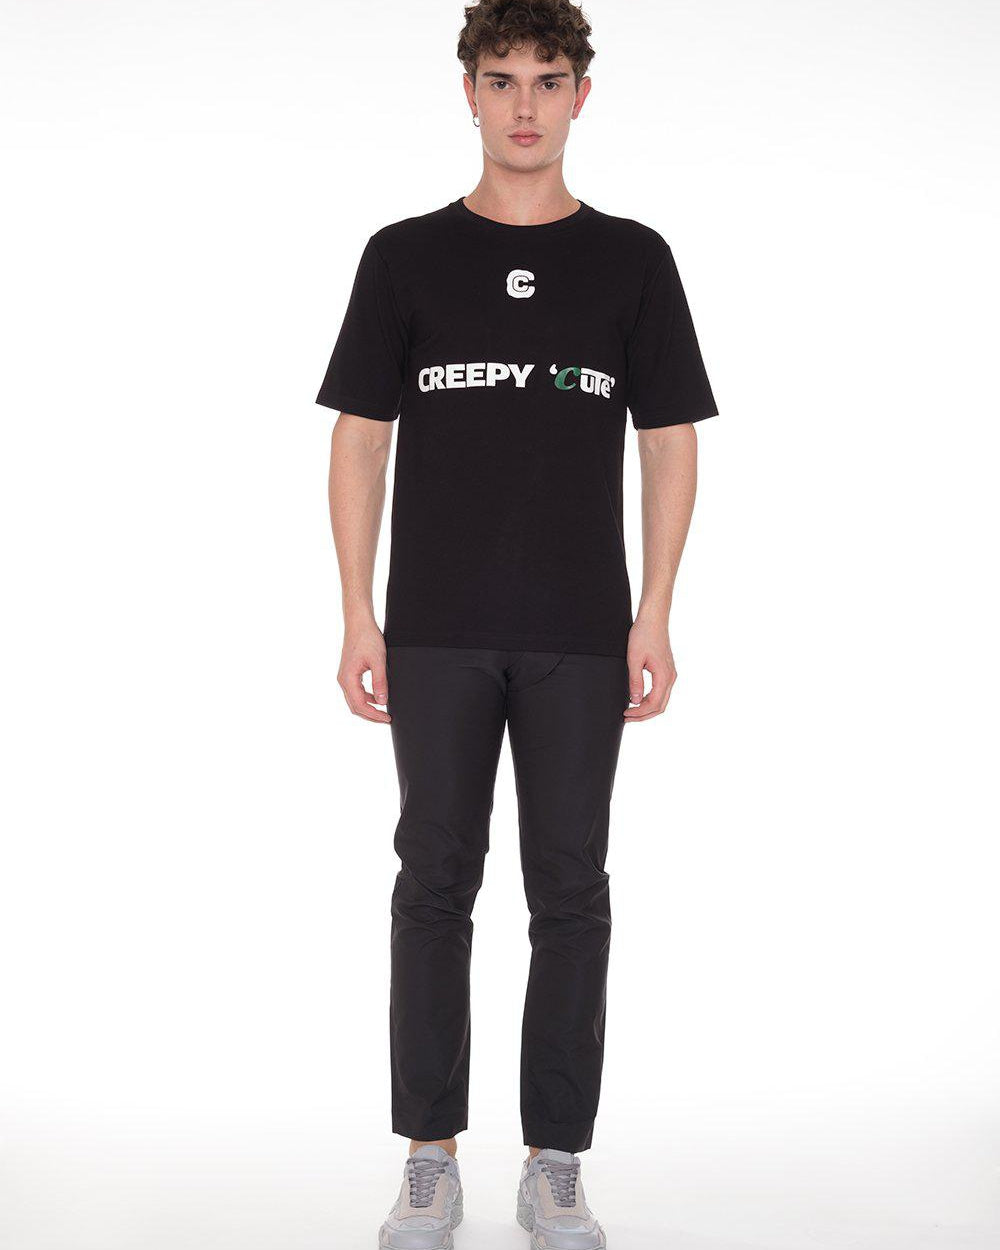 Black Creepy Cute T-Shirt - Tops - Xander Zhou - Elevastor